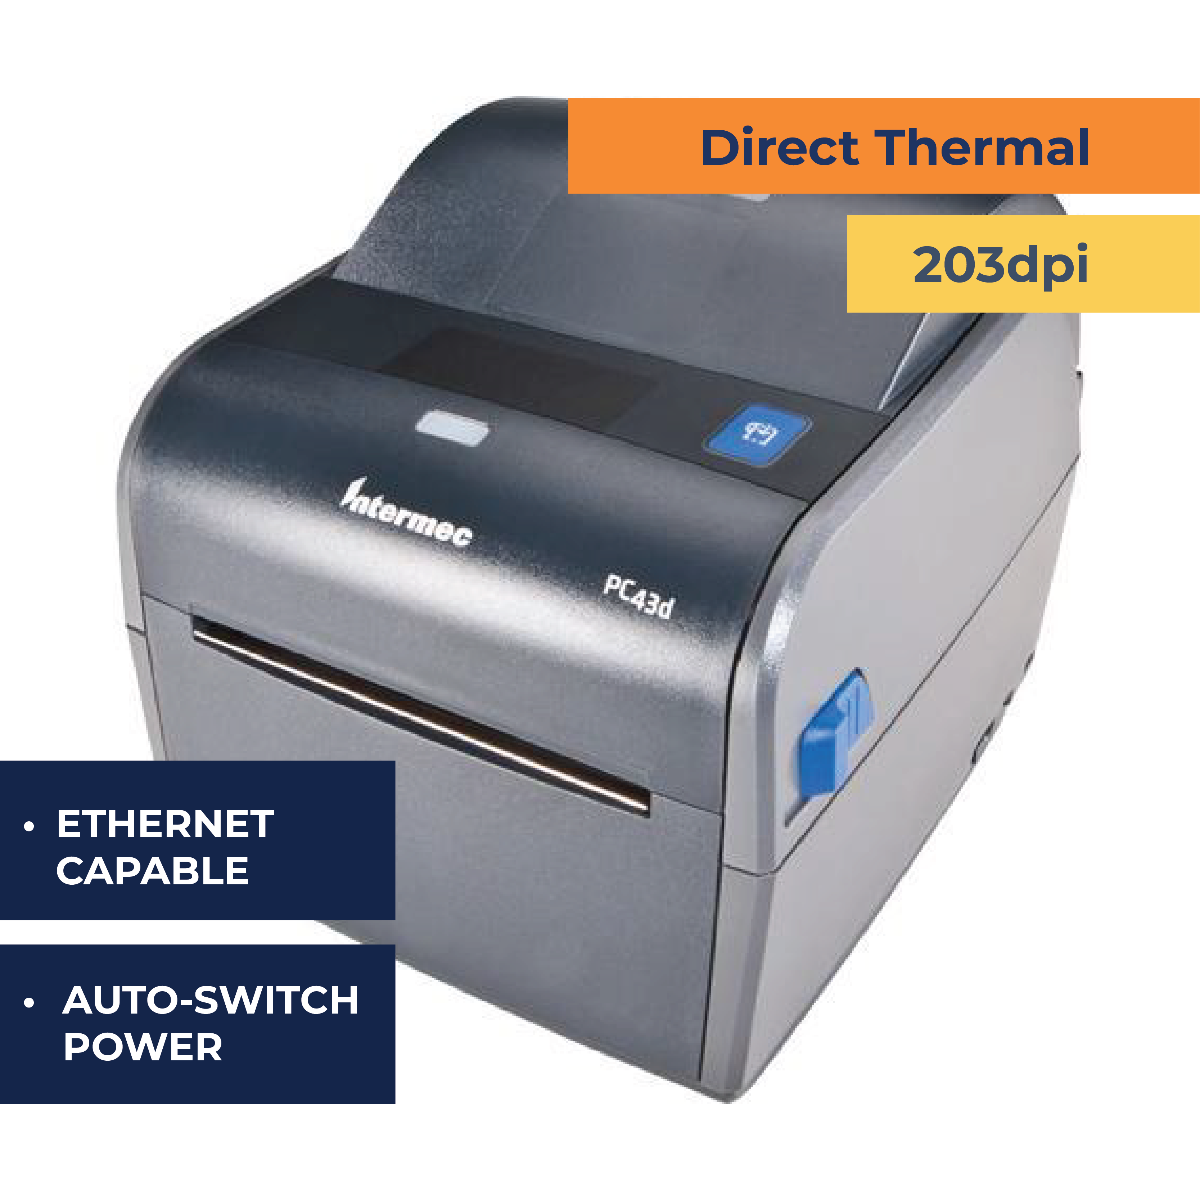 Honeywell PC43D DT Desktop Printer-Ethernet-203 dpi